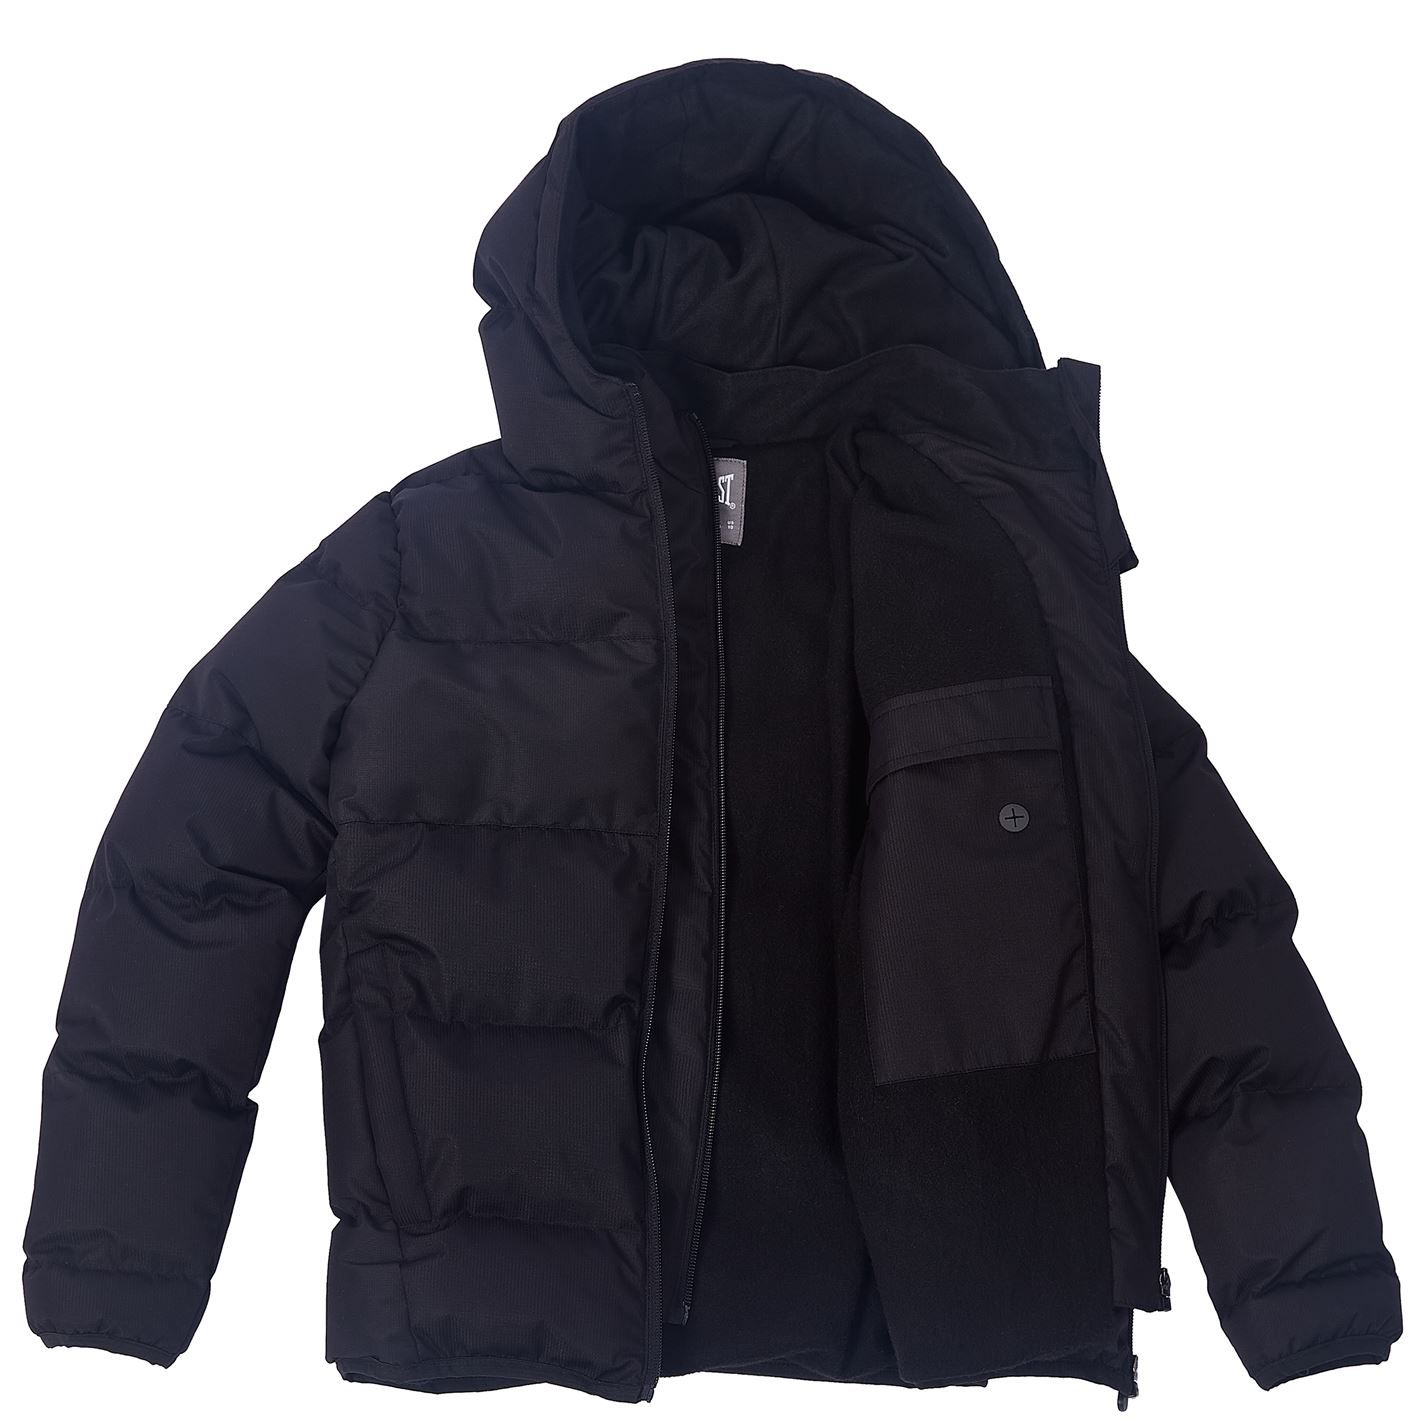 Everlast Boys Bubble Jacket Puffer Jacket Outerwear Hooded Warmt Winter Top